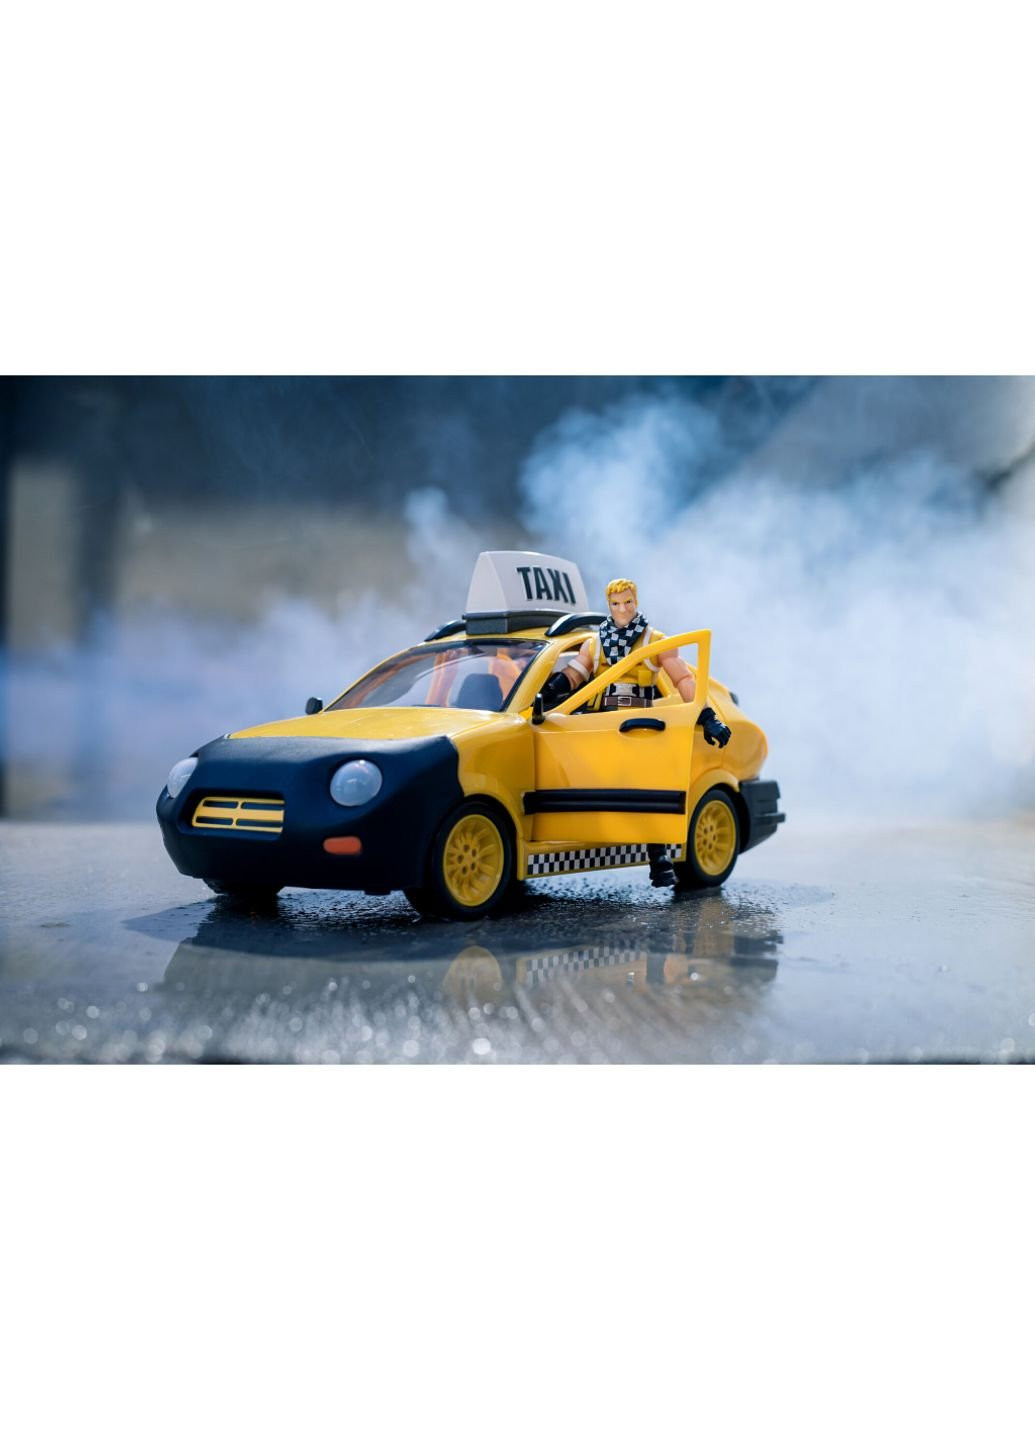 Фігурка Fortnite Joy Ride Vehicle Taxi Cab (FNT0817) Jazwares (254079693)